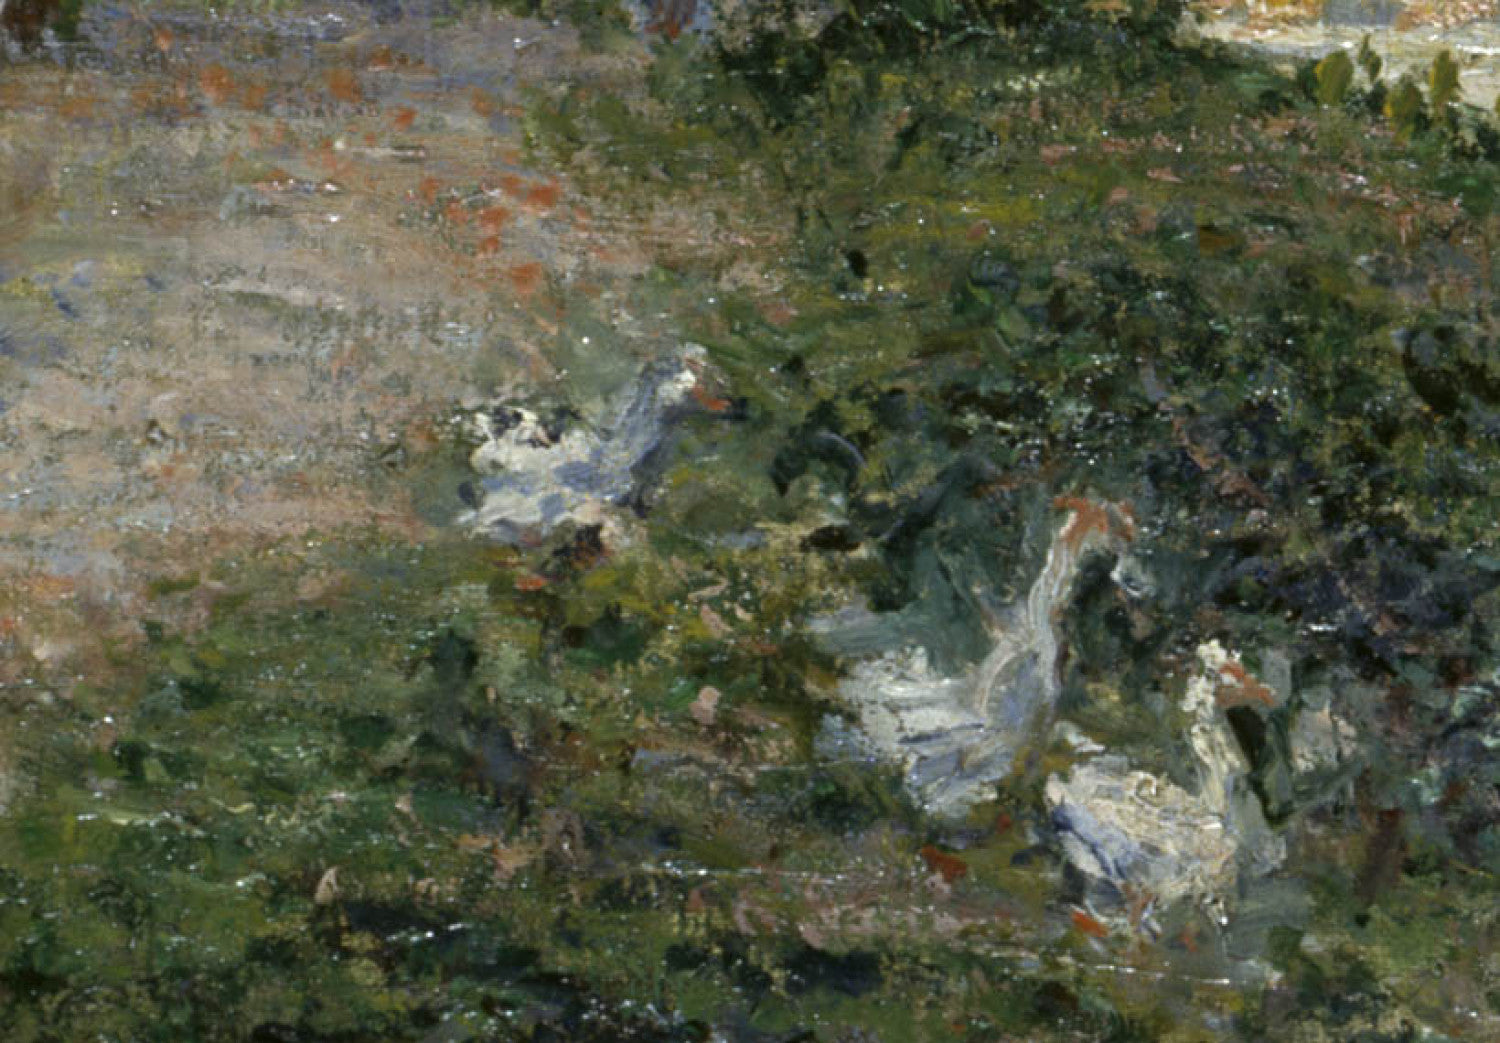 Embankment of the Seine - Claude Monet